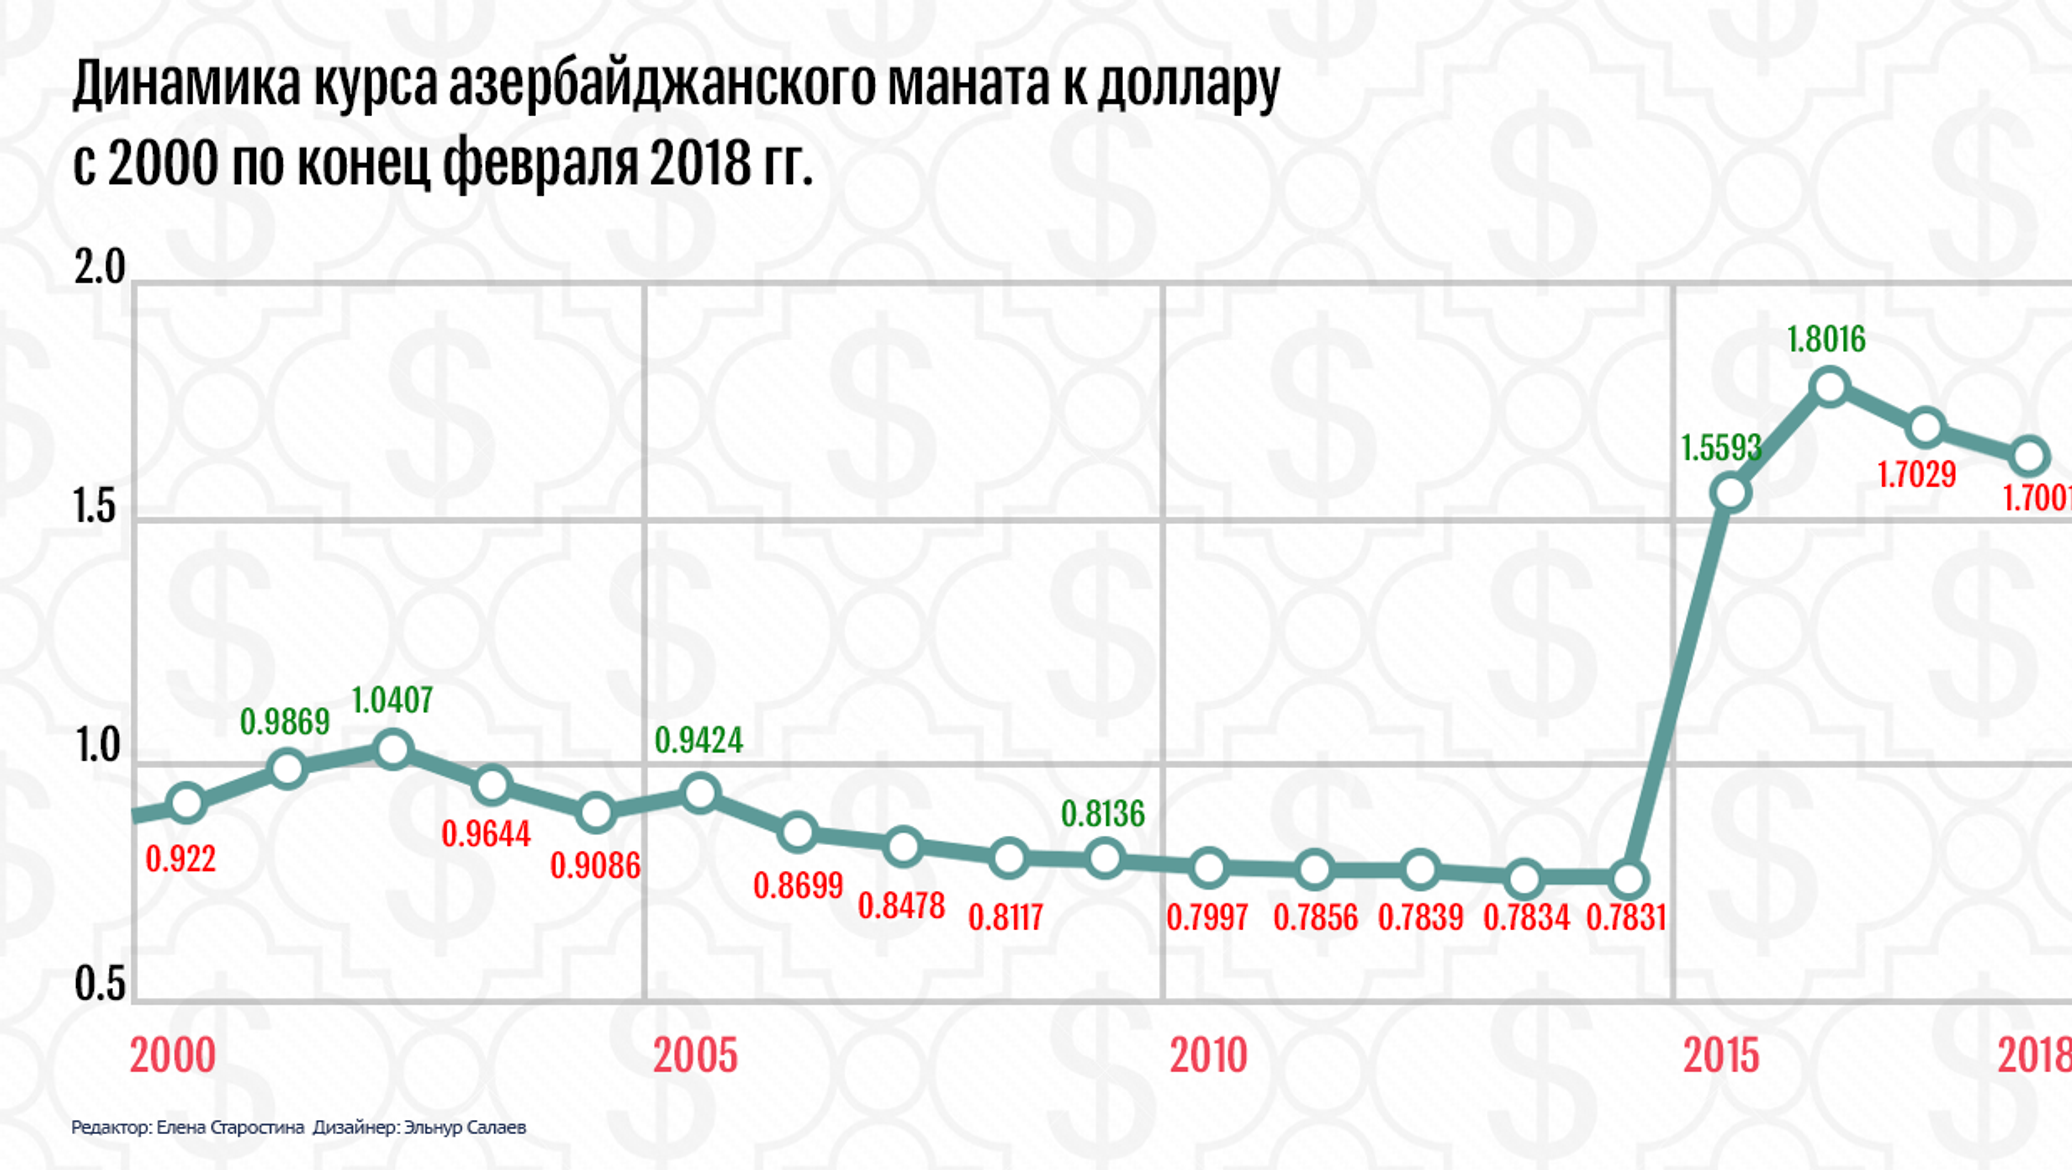 1 манат в долларах. Динамика курса доллара к рублю с 2000 года. Динамика рубля к доллару с 2000 года. Курс рубля с 2000 года график. Динамика роста доллара с 2000 года.